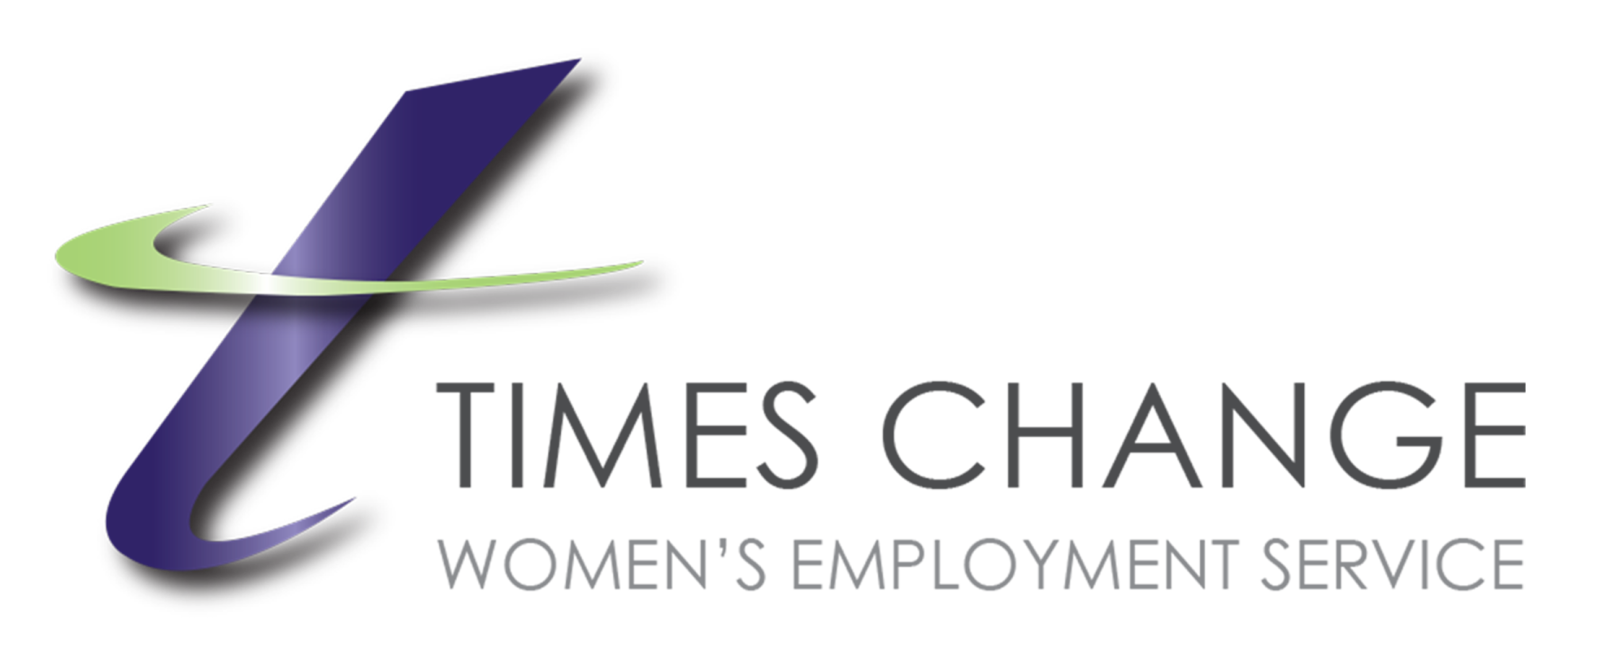 Times Change Women's Employment Service